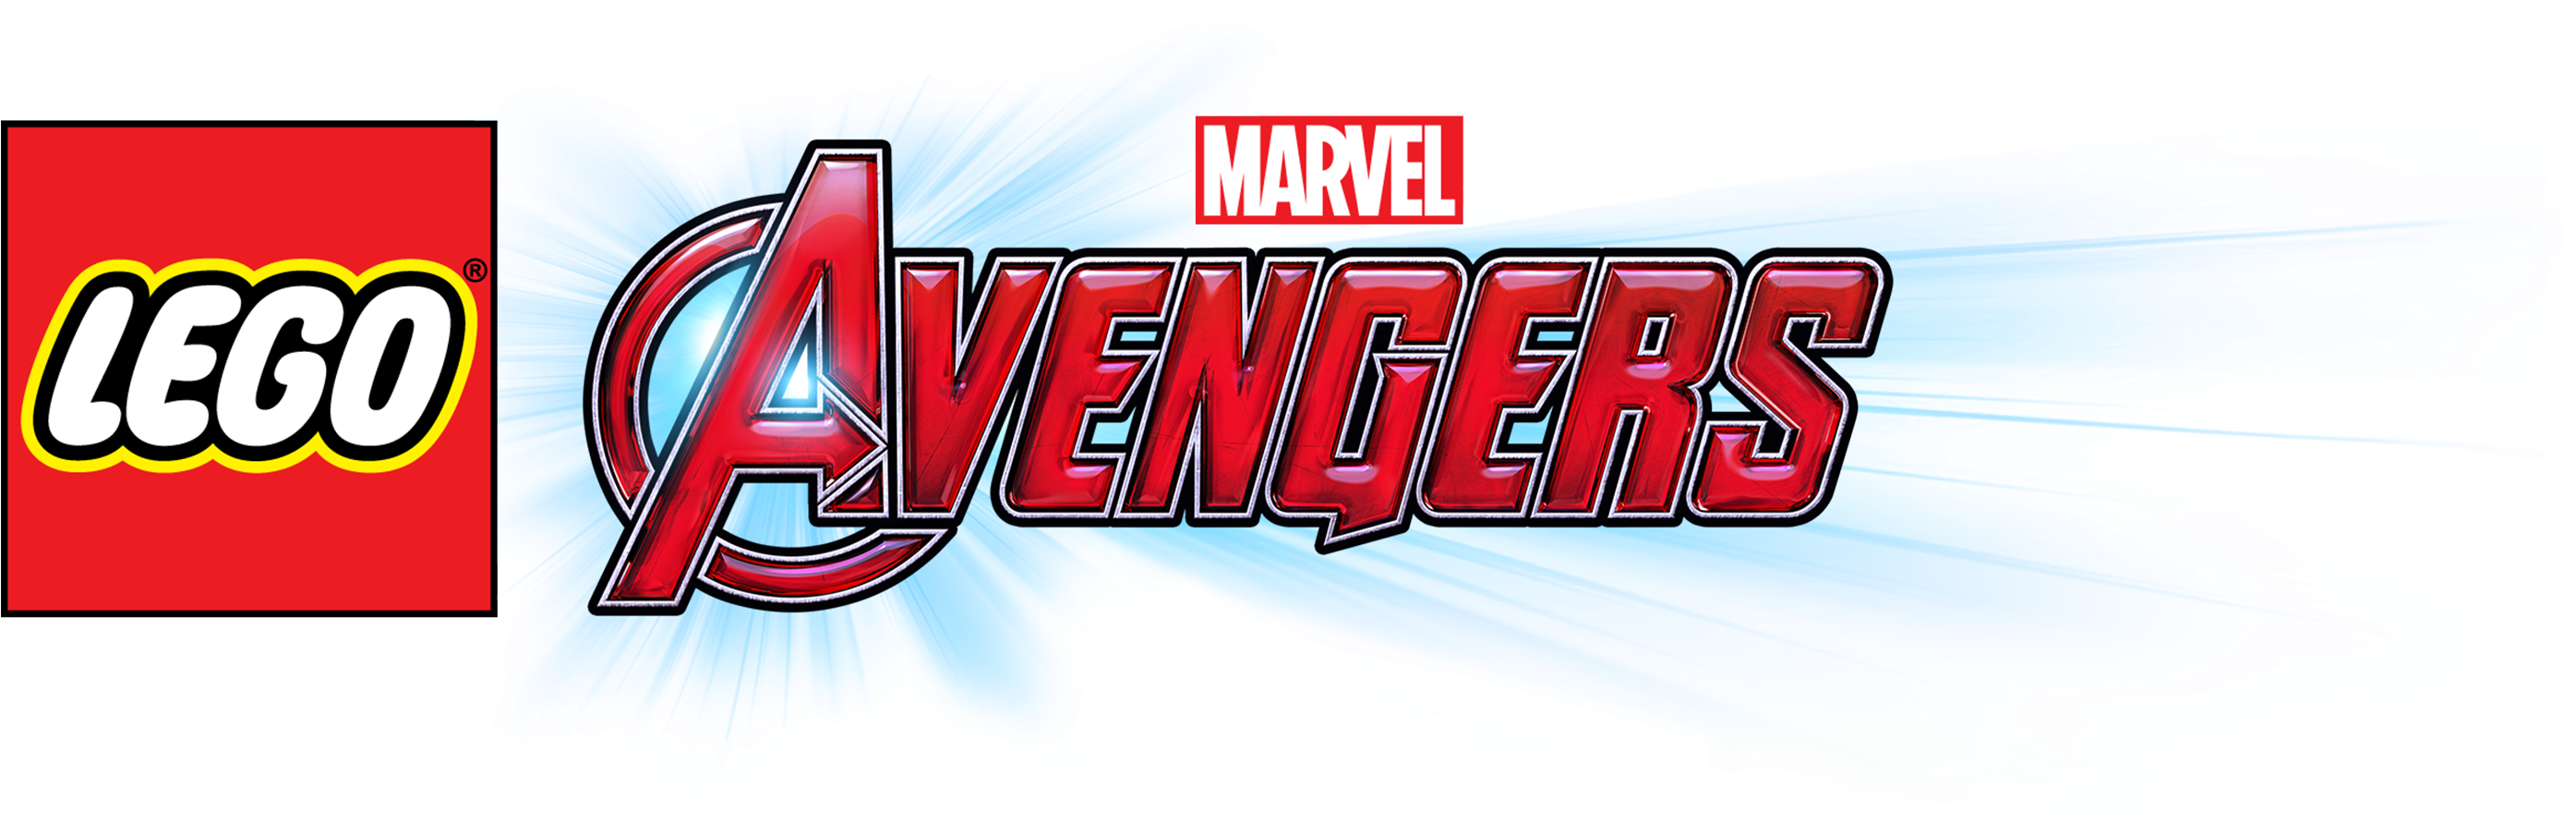 Avengers logo PNG Image